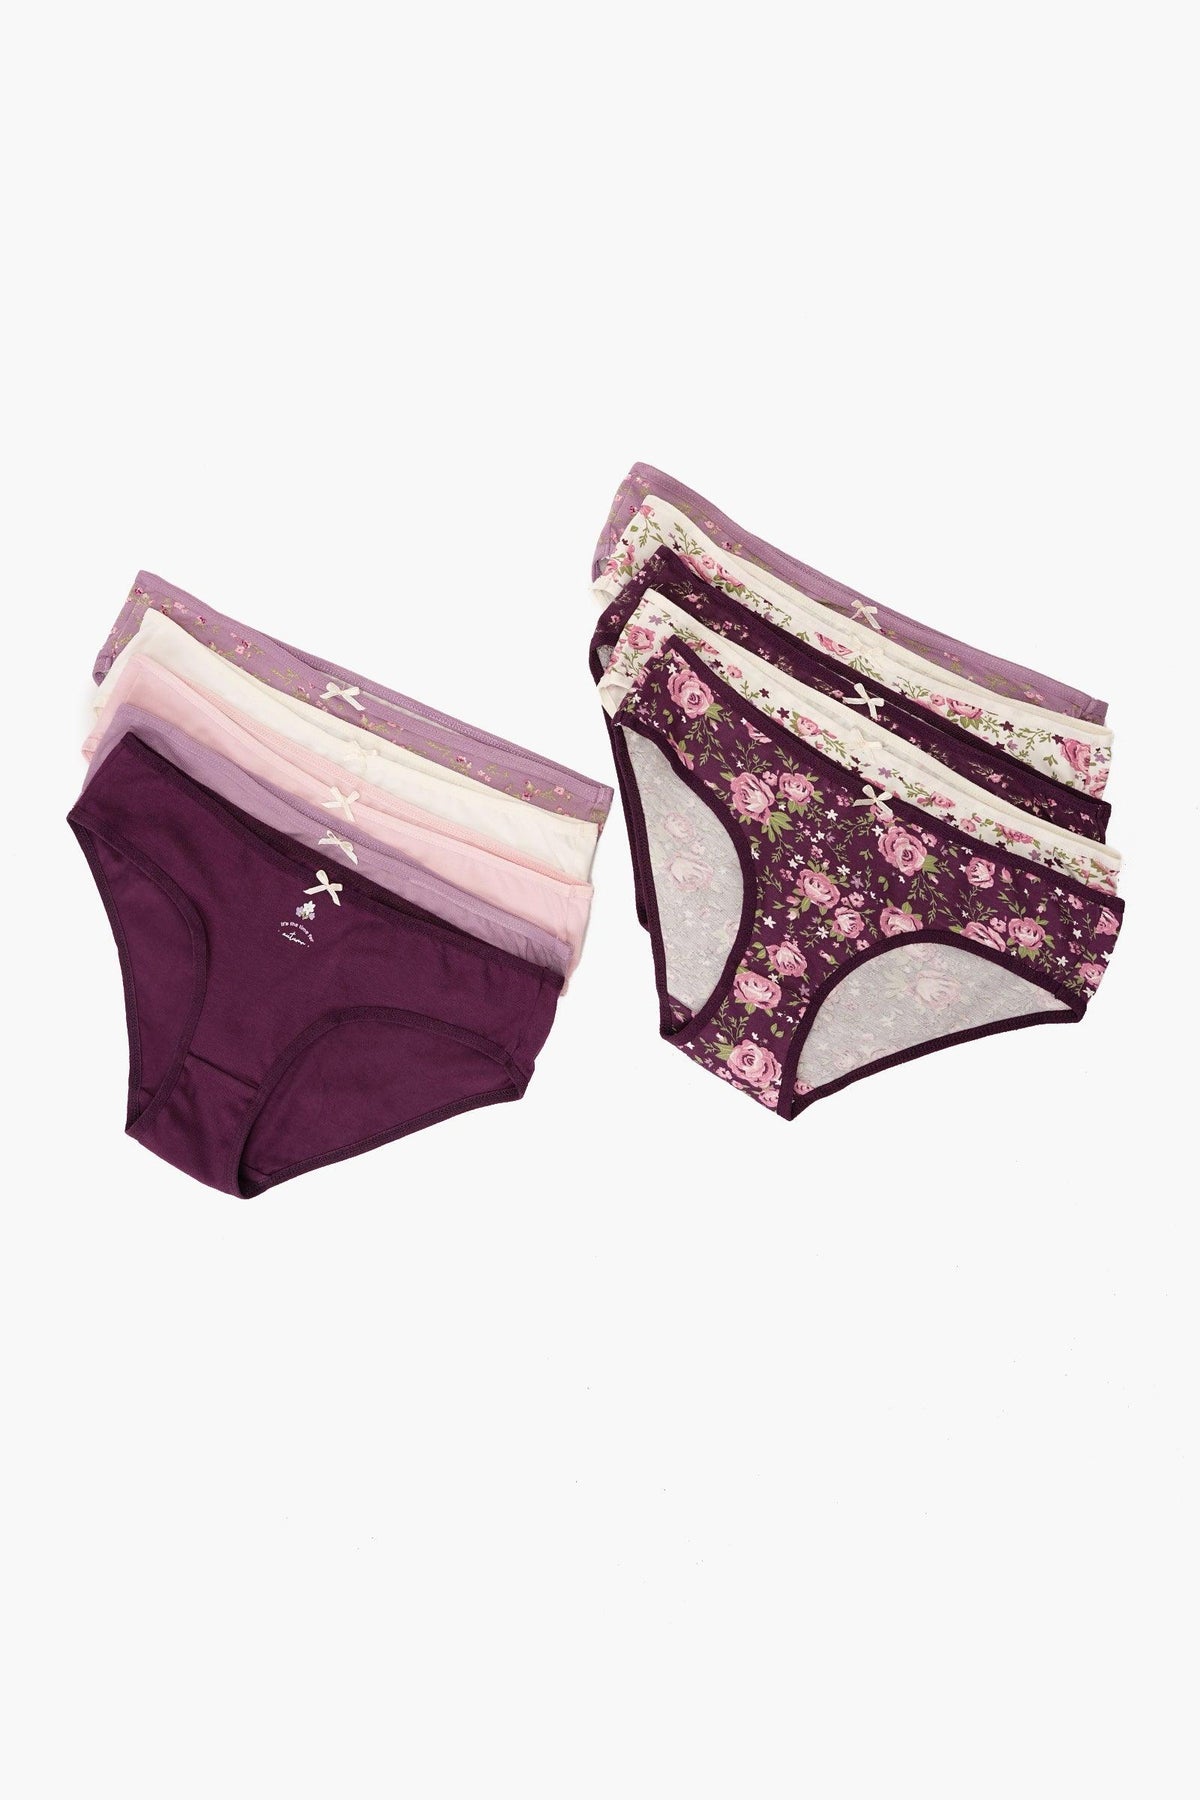 Pack of 10 Colored Bikini Panties - Carina - كارينا